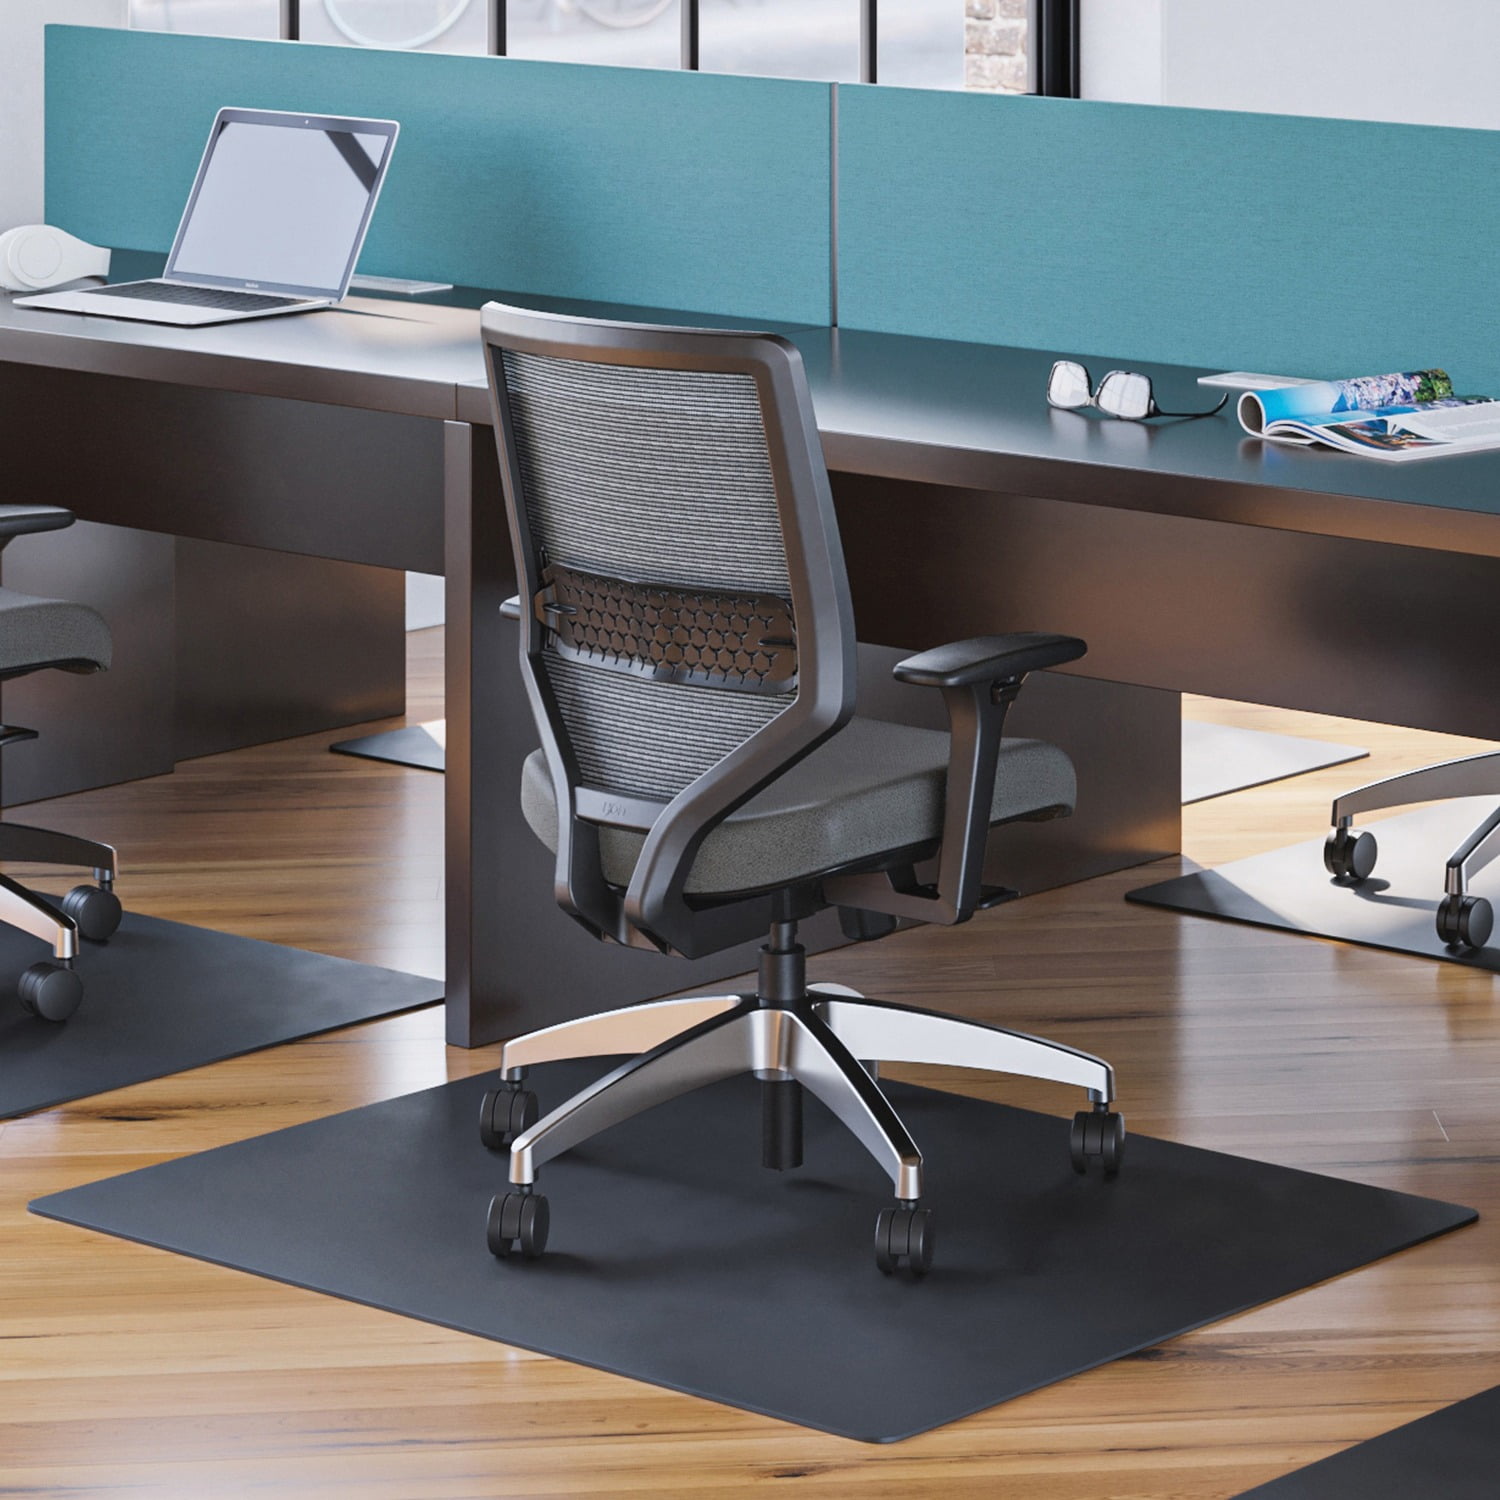 CM11442FBLKCOM 46 x 60 Inches Straight Edge Deflecto EconoMat Black Chair Mat Low Pile Carpet Use Rectangle 